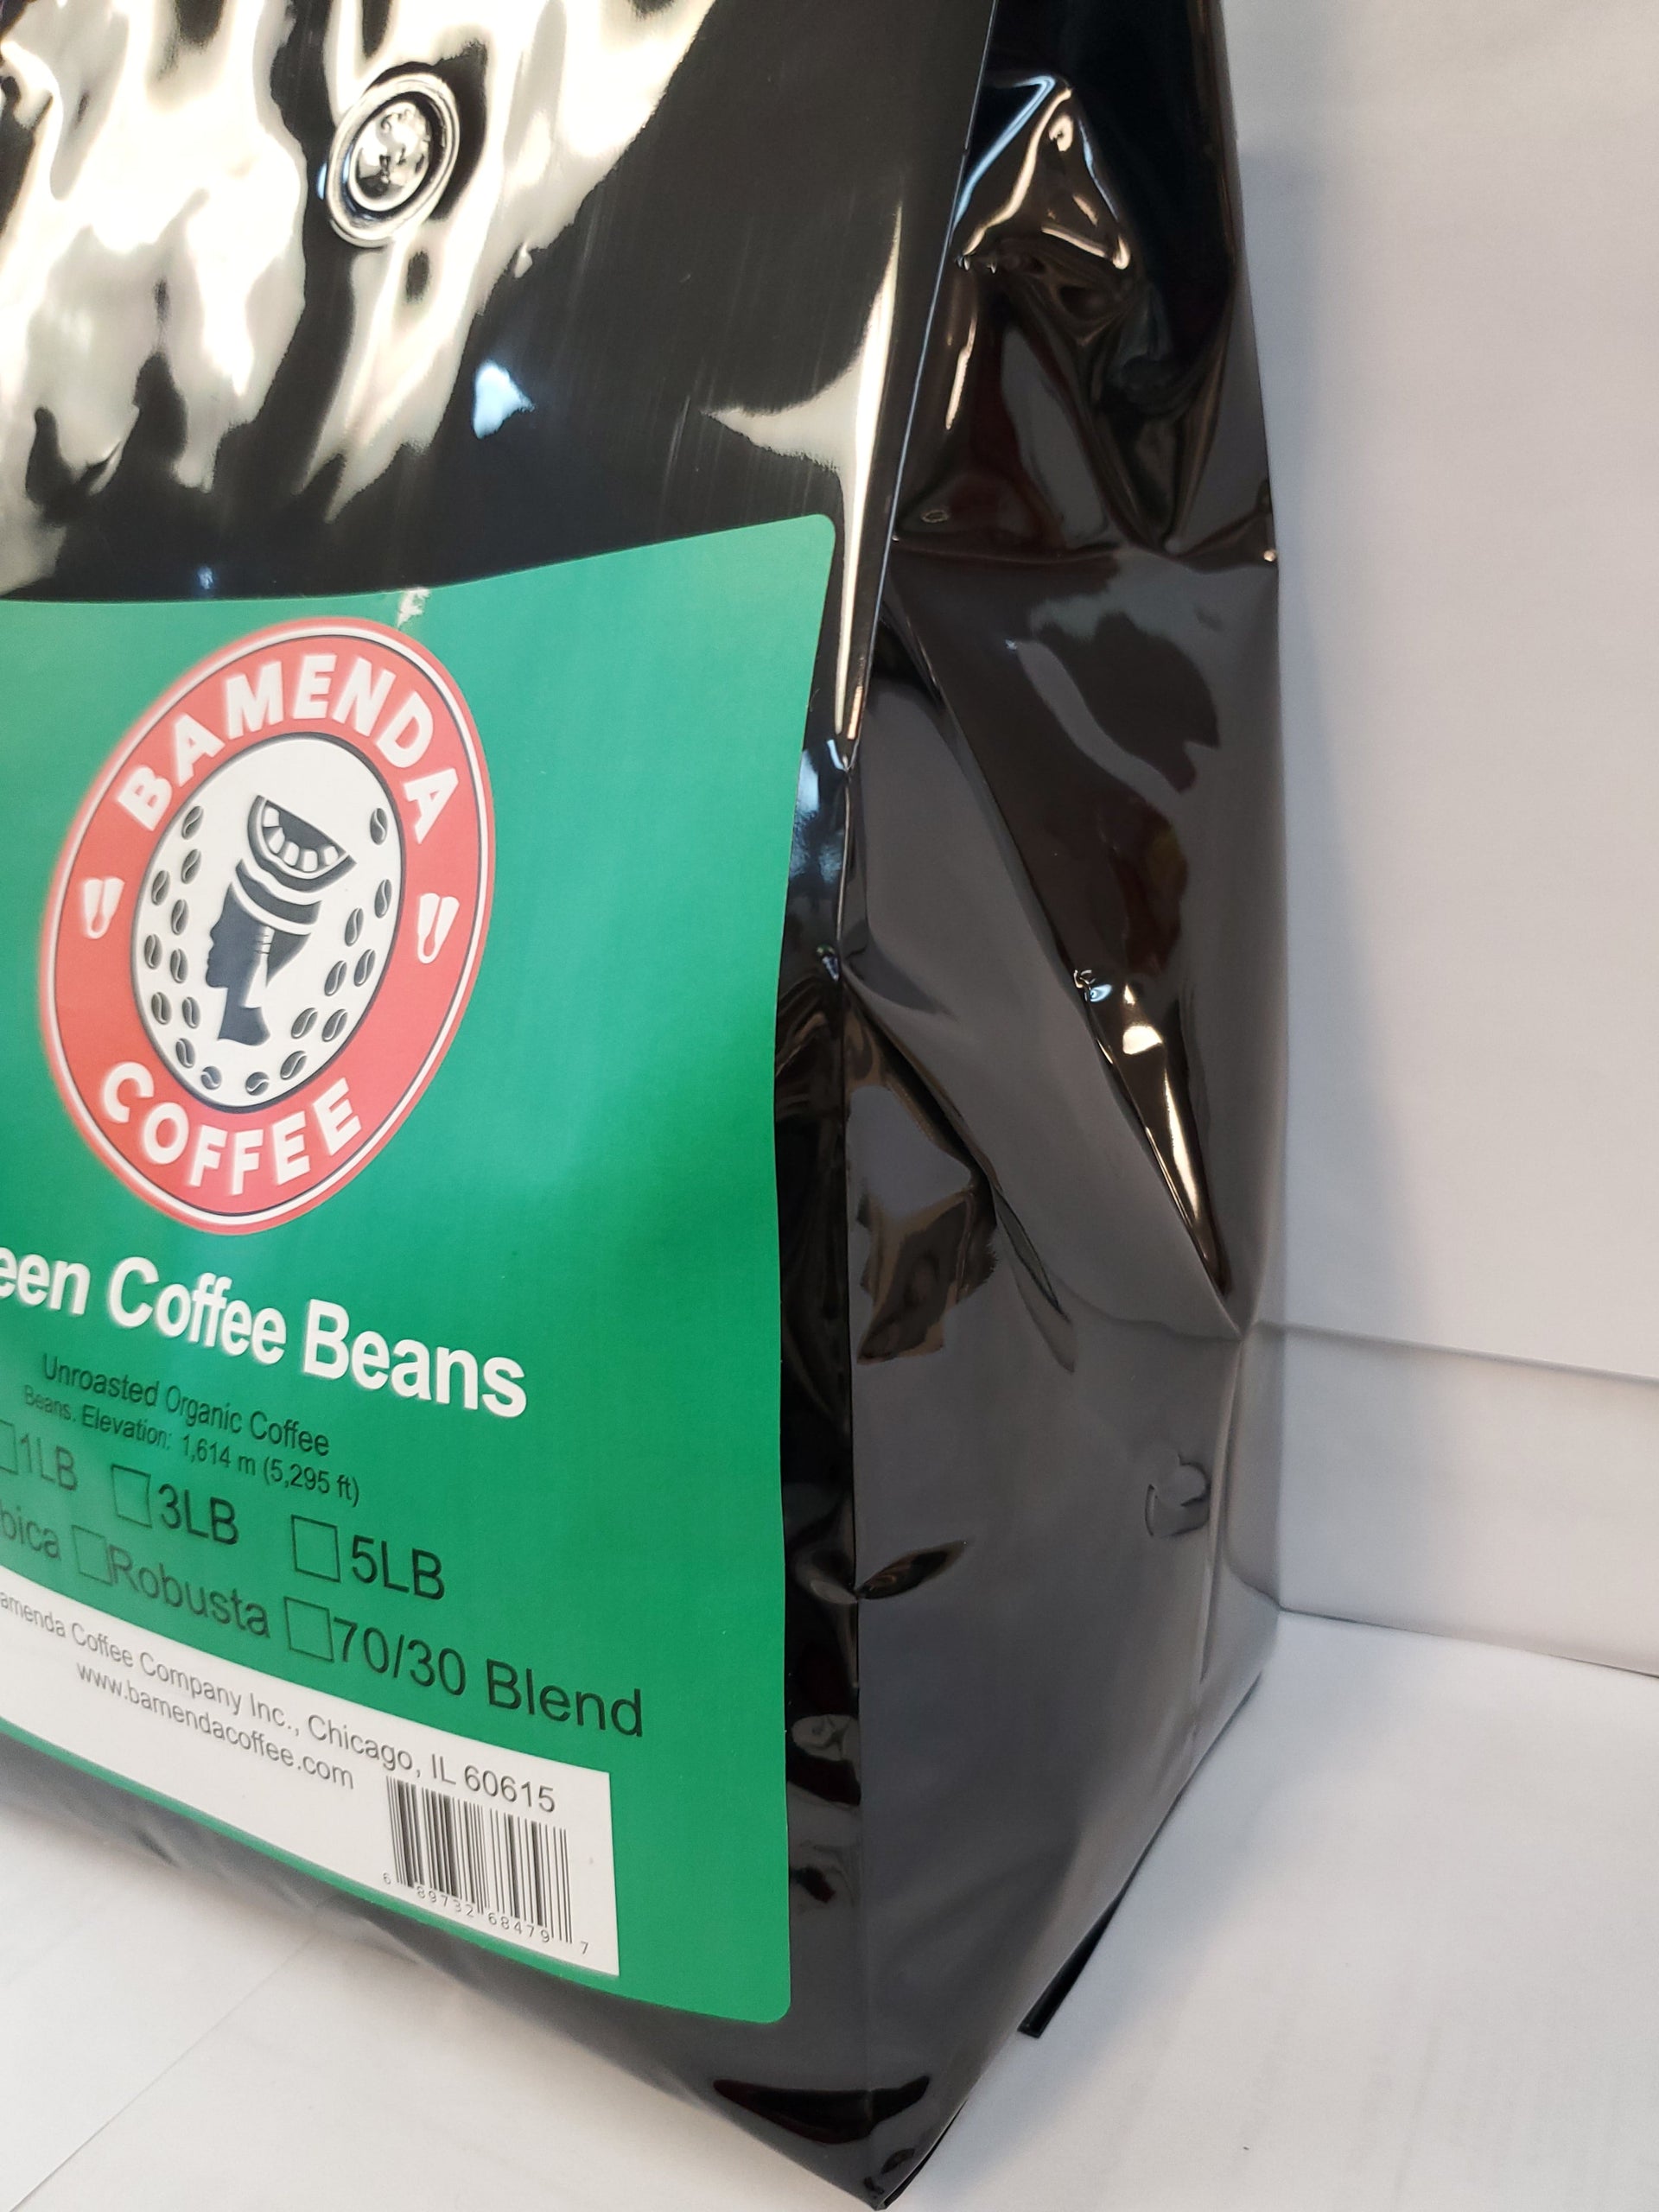 Green Coffee Beans, 100% Arabica (5 LBS, 3 LBS, 1LBS, UnRoasted) - Bamenda Coffee